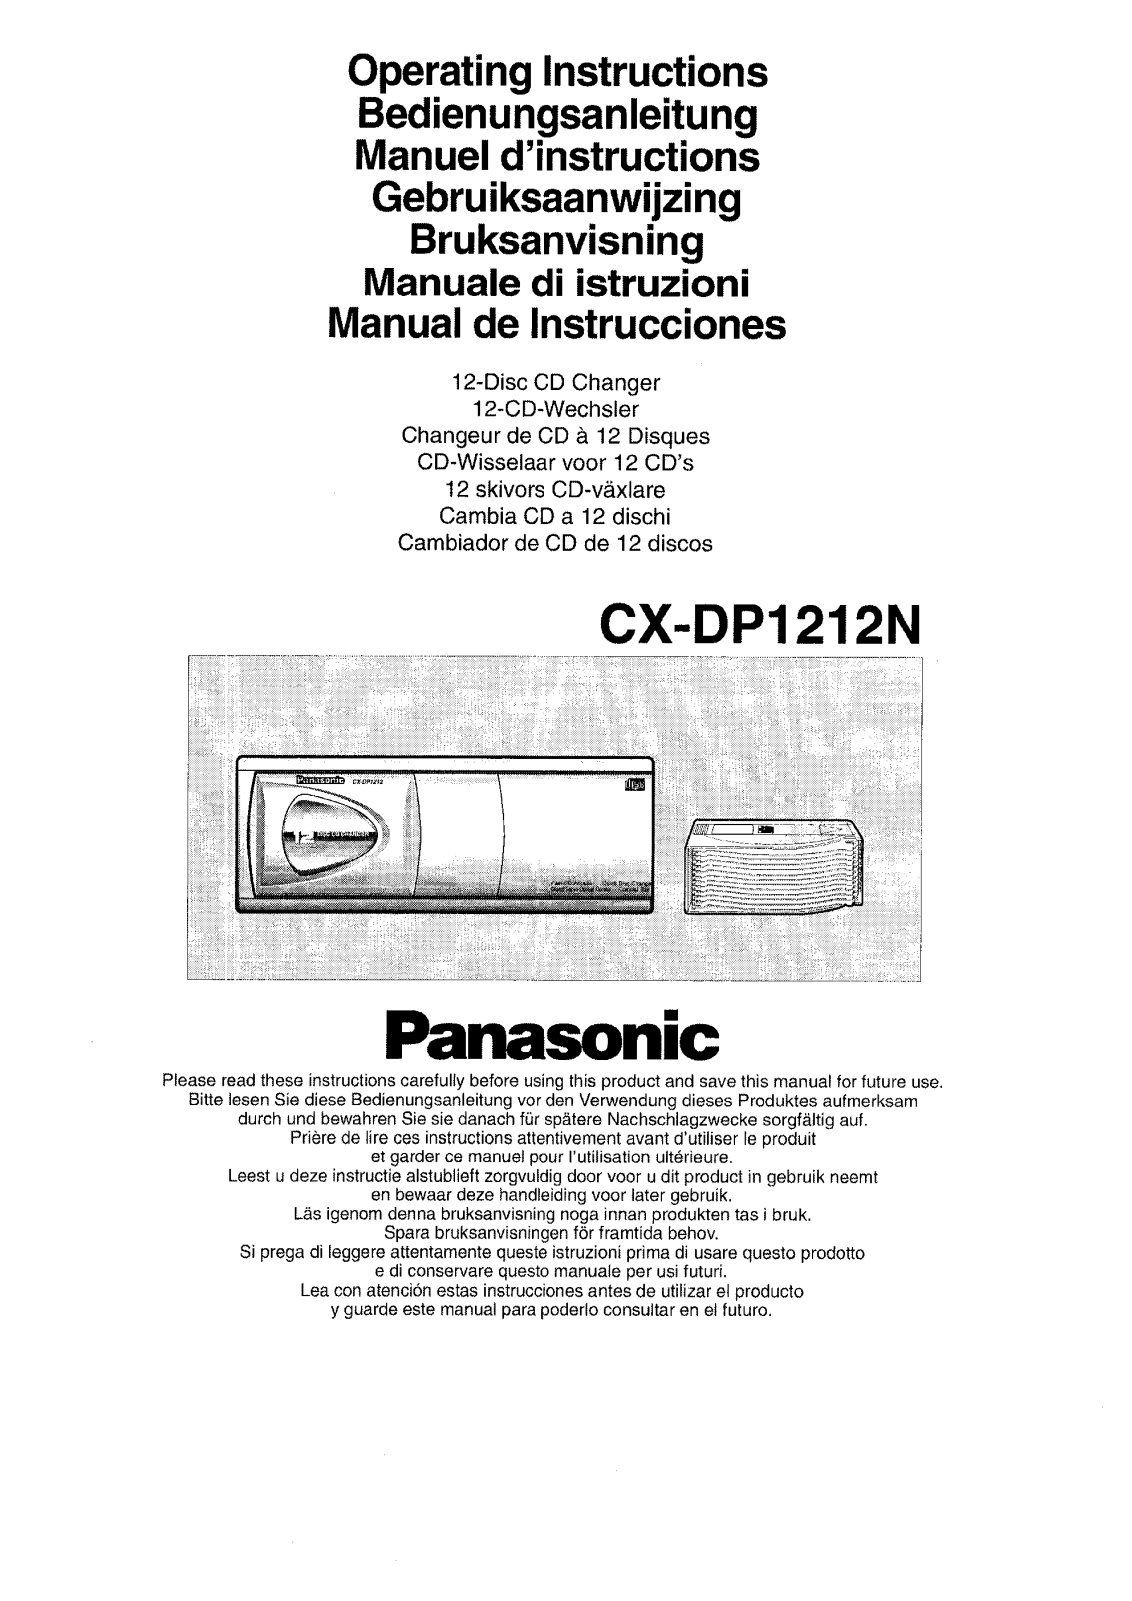 Panasonic CX-DP1212 User Manual